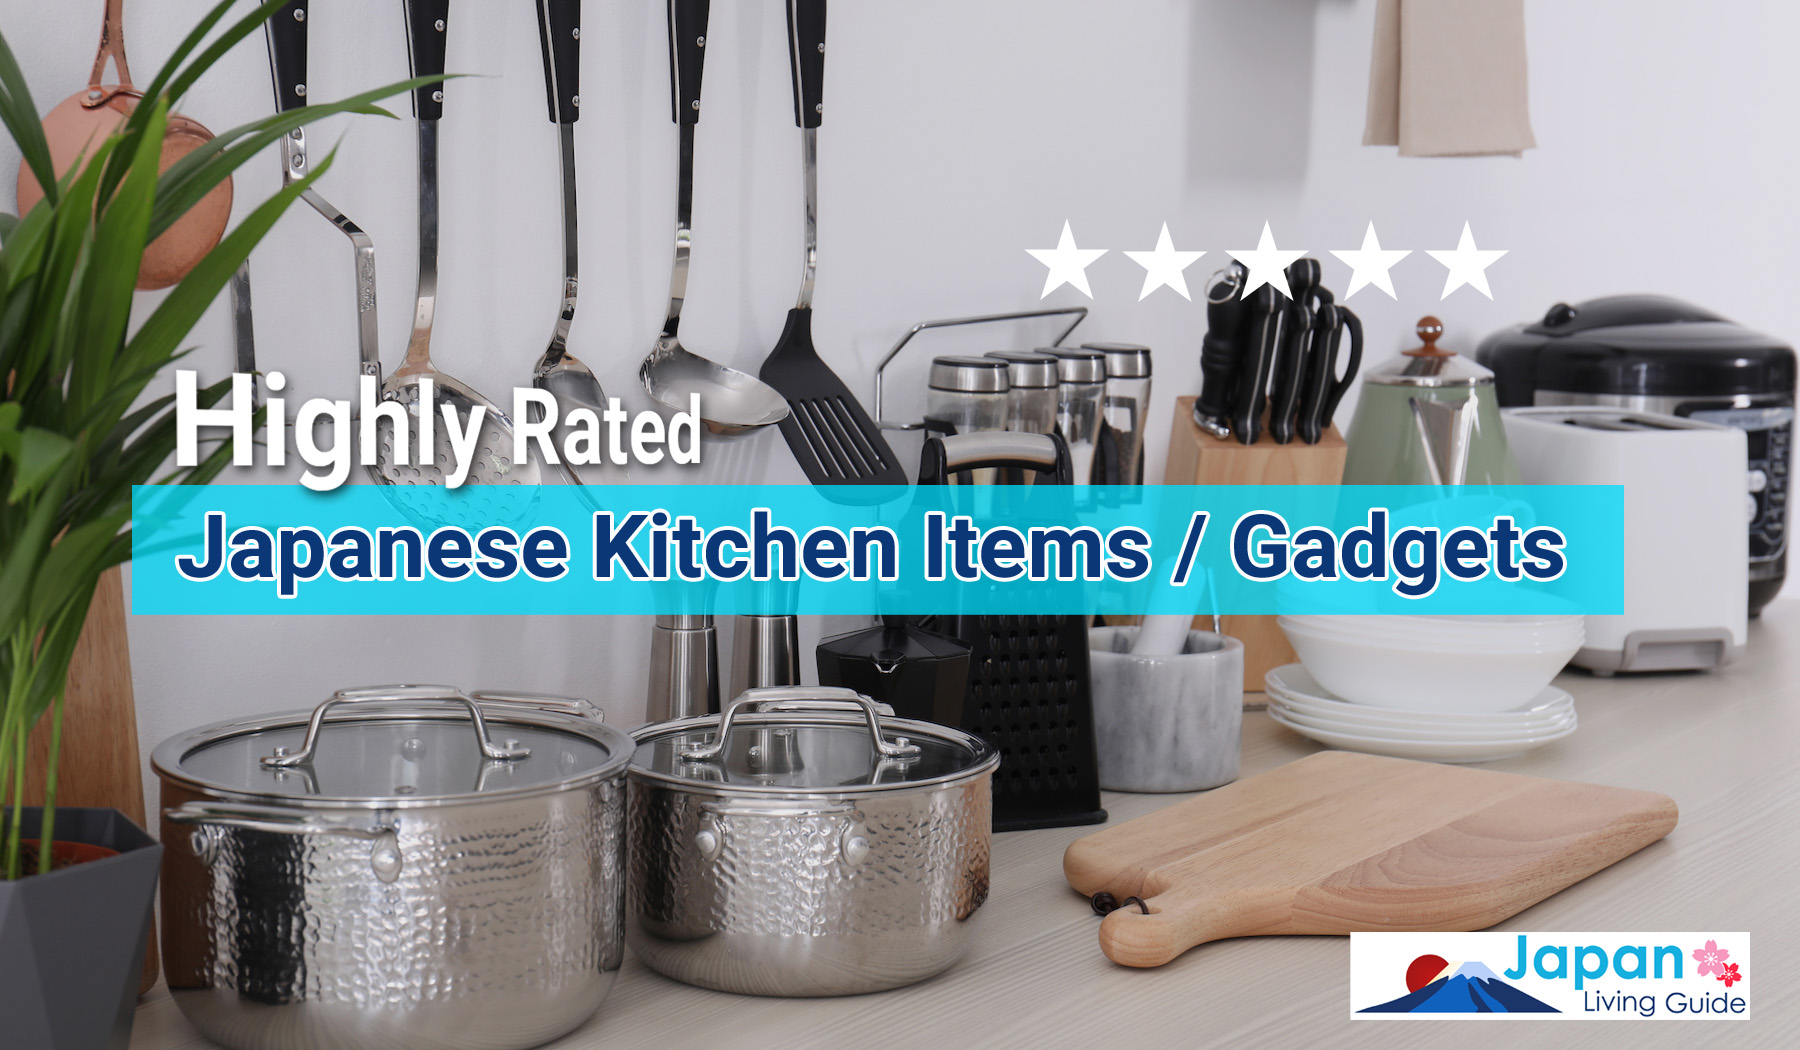 https://www.japanlivingguide.com/media/2n3hdiu4/japanese-kitchen-items.jpg